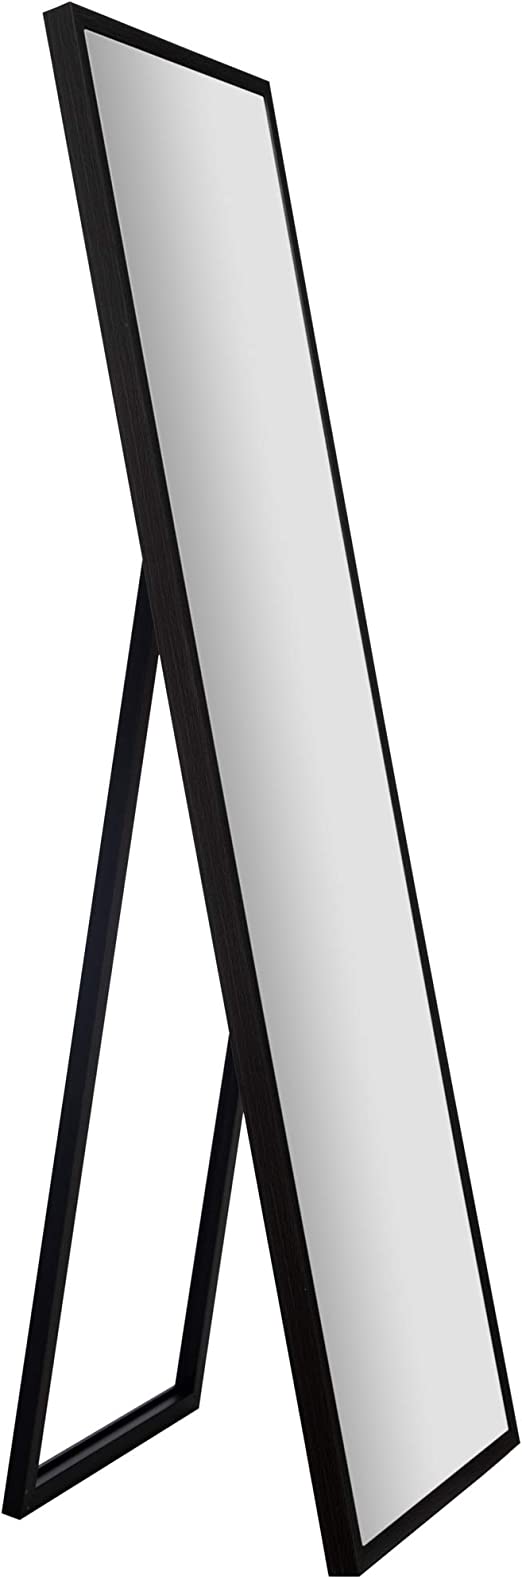 Gallery Solutions Framed Floor Free Standing Easel Full Length Mirror, 16.5" x 57", Black